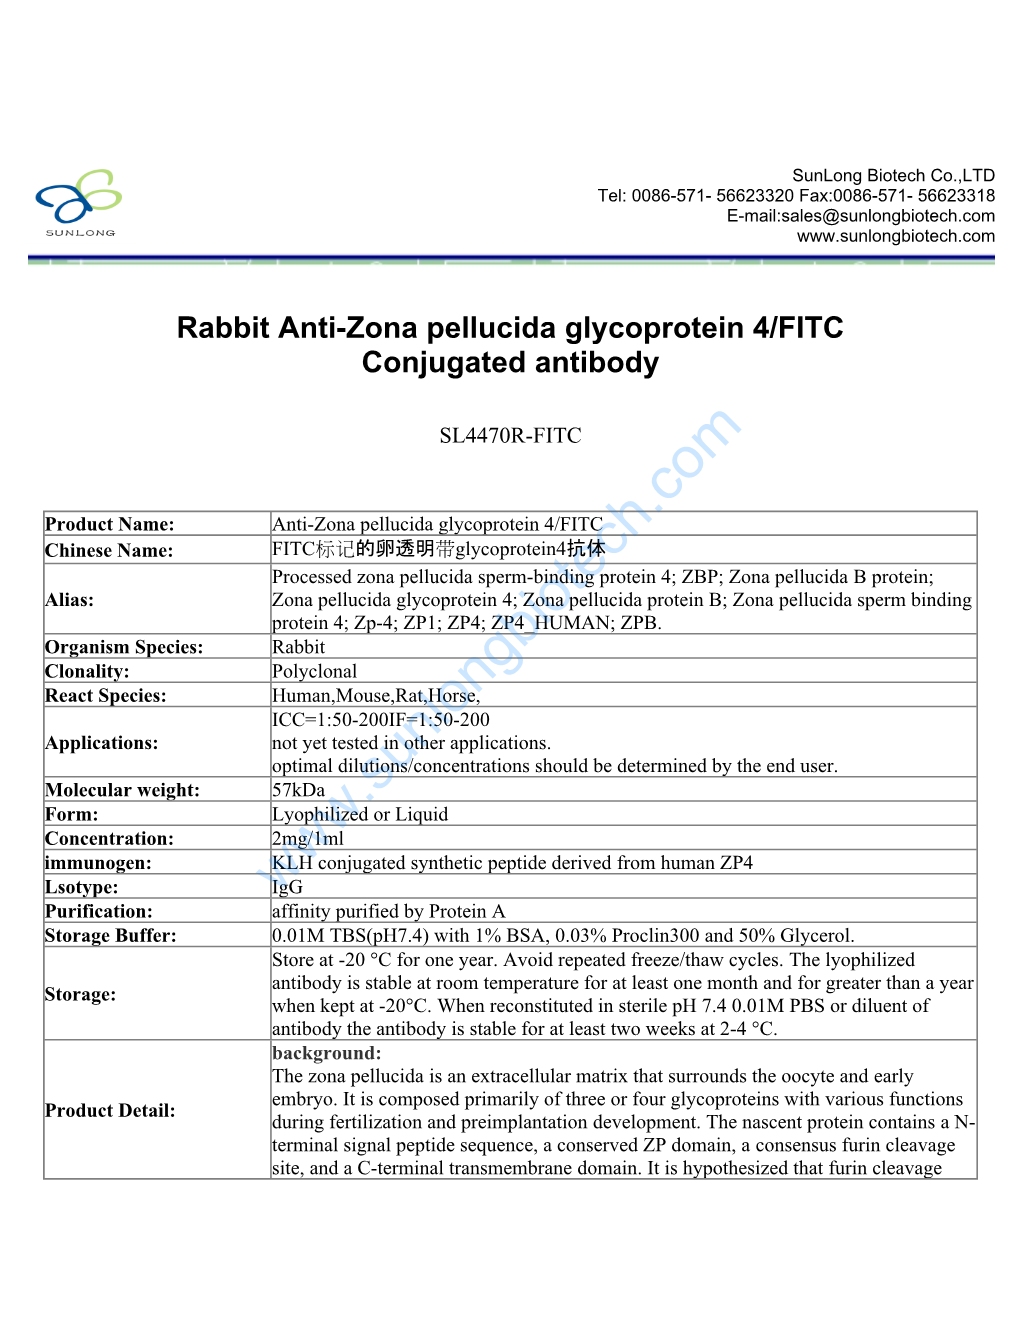 Rabbit Anti-Zona Pellucida Glycoprotein 4/FITC Conjugated Antibody